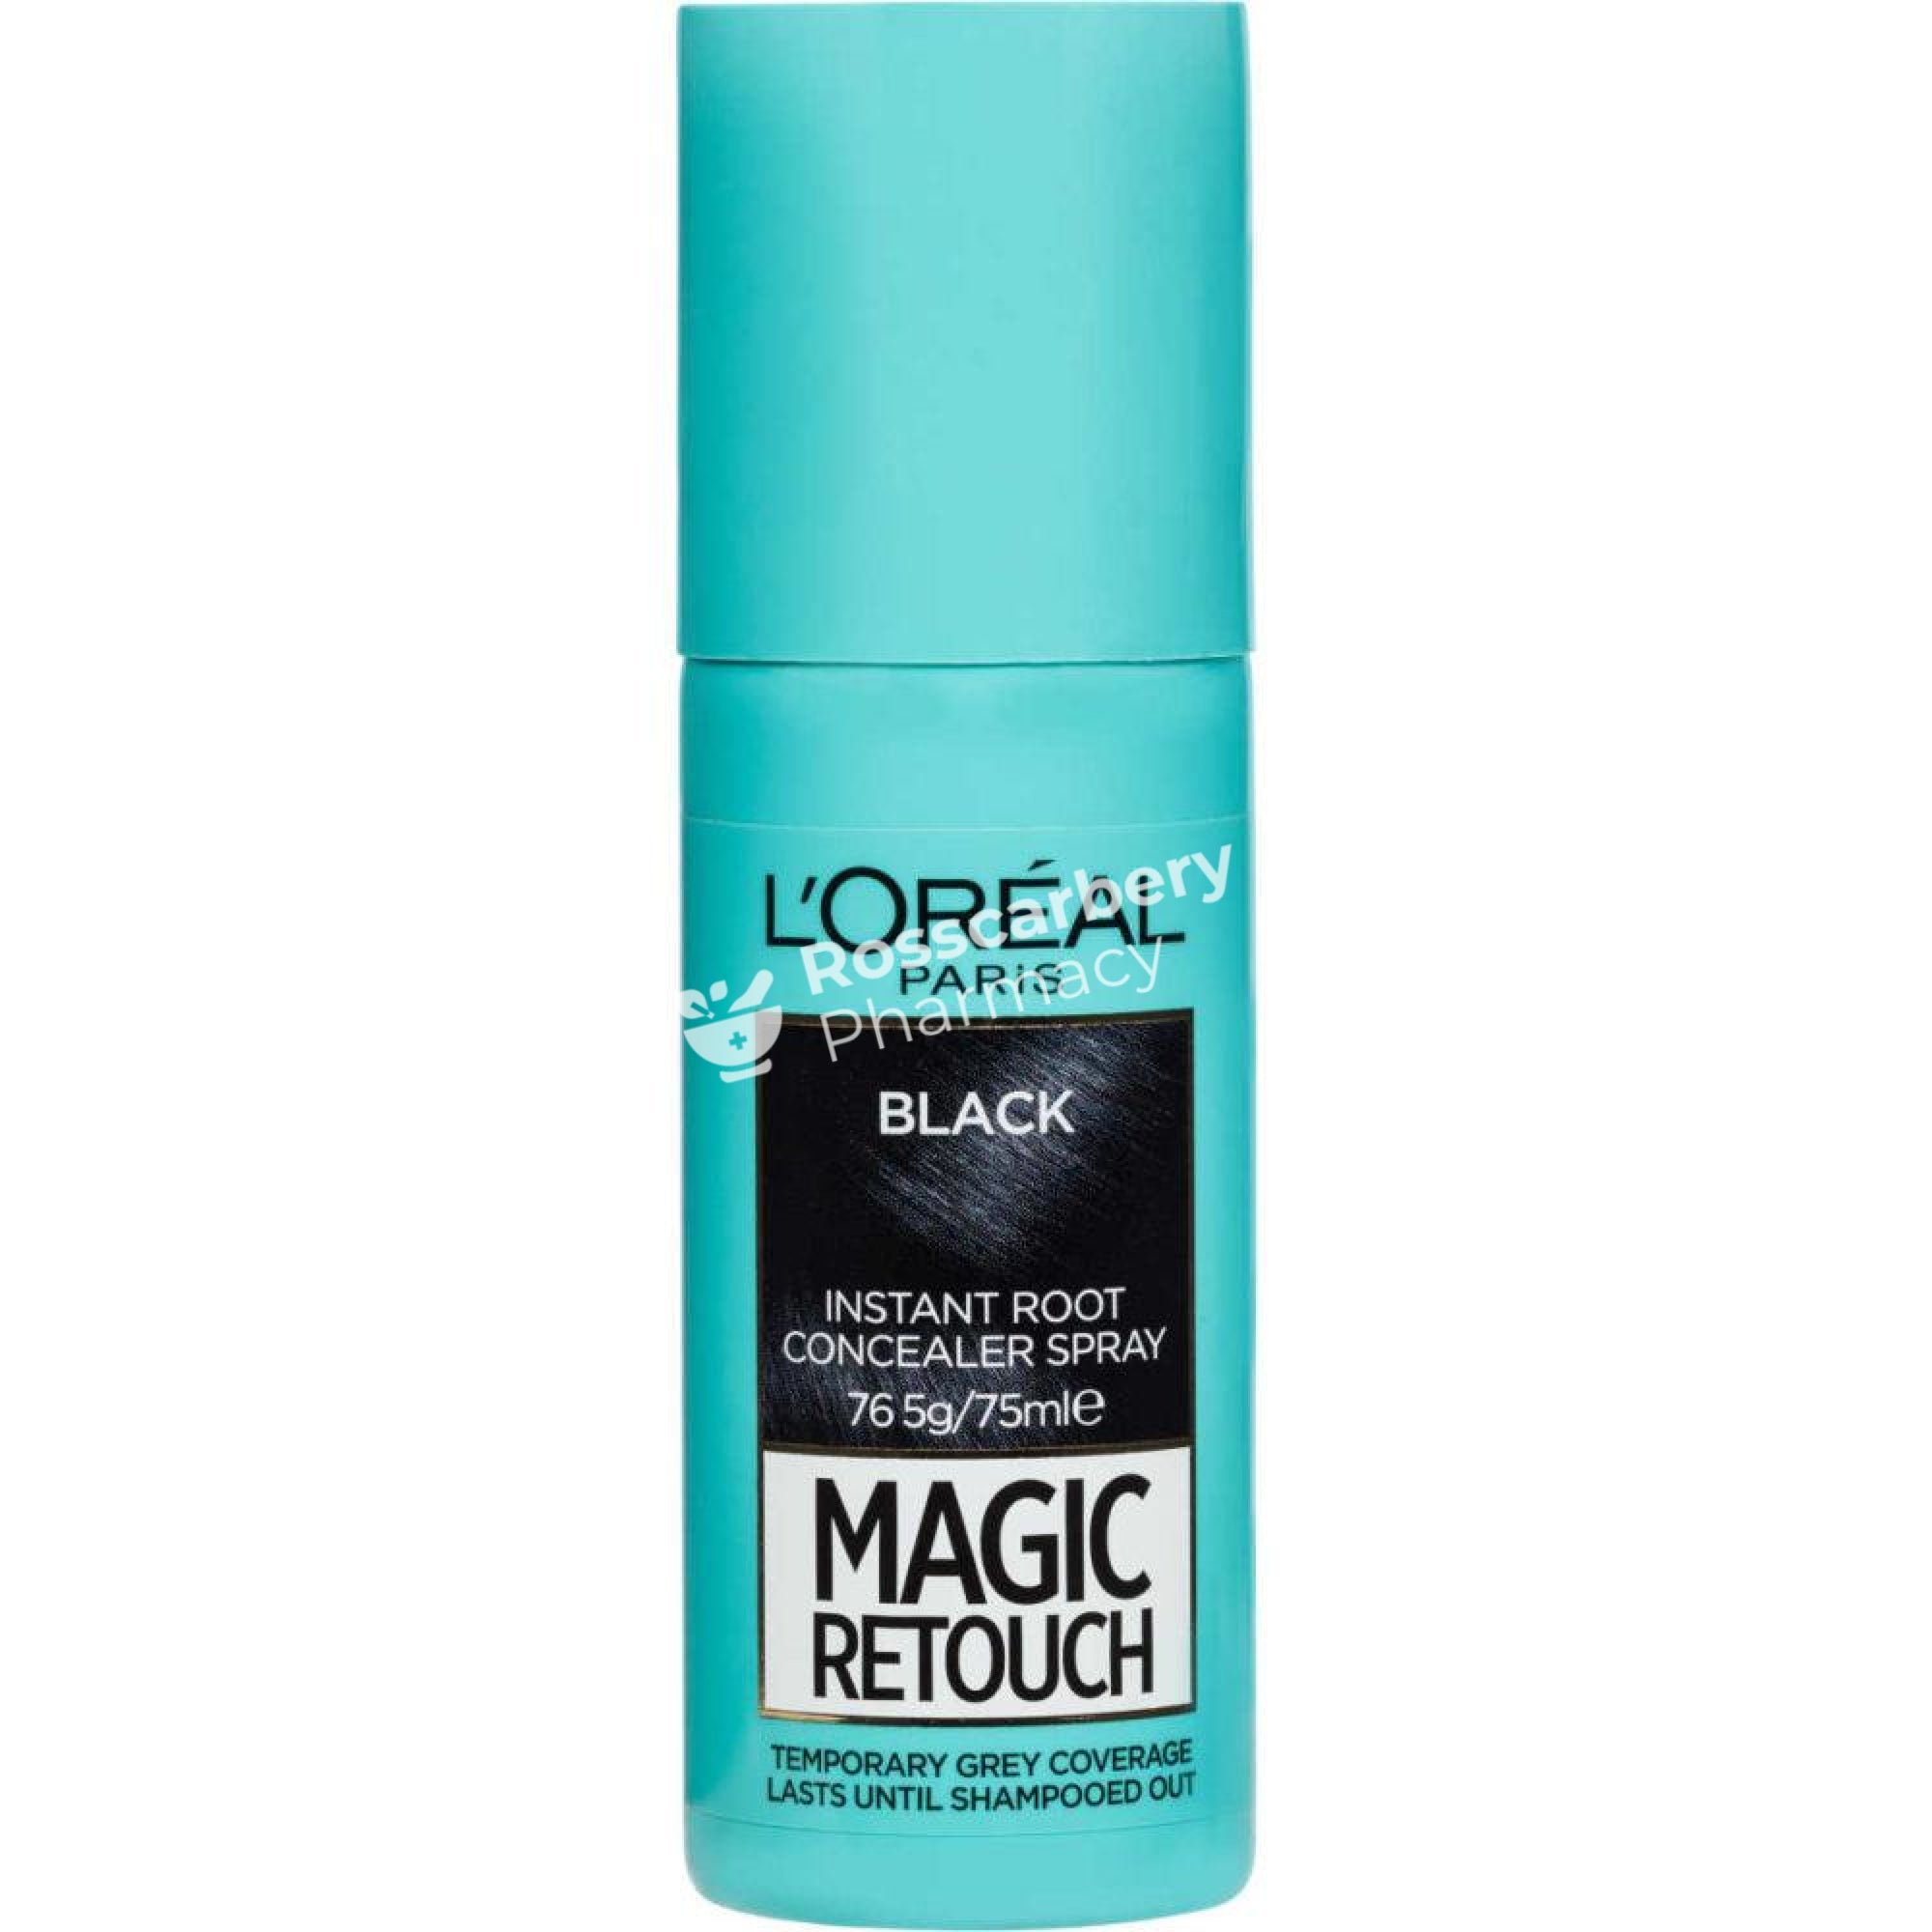 Loreal Magic Retouch - Black Hair Colouring